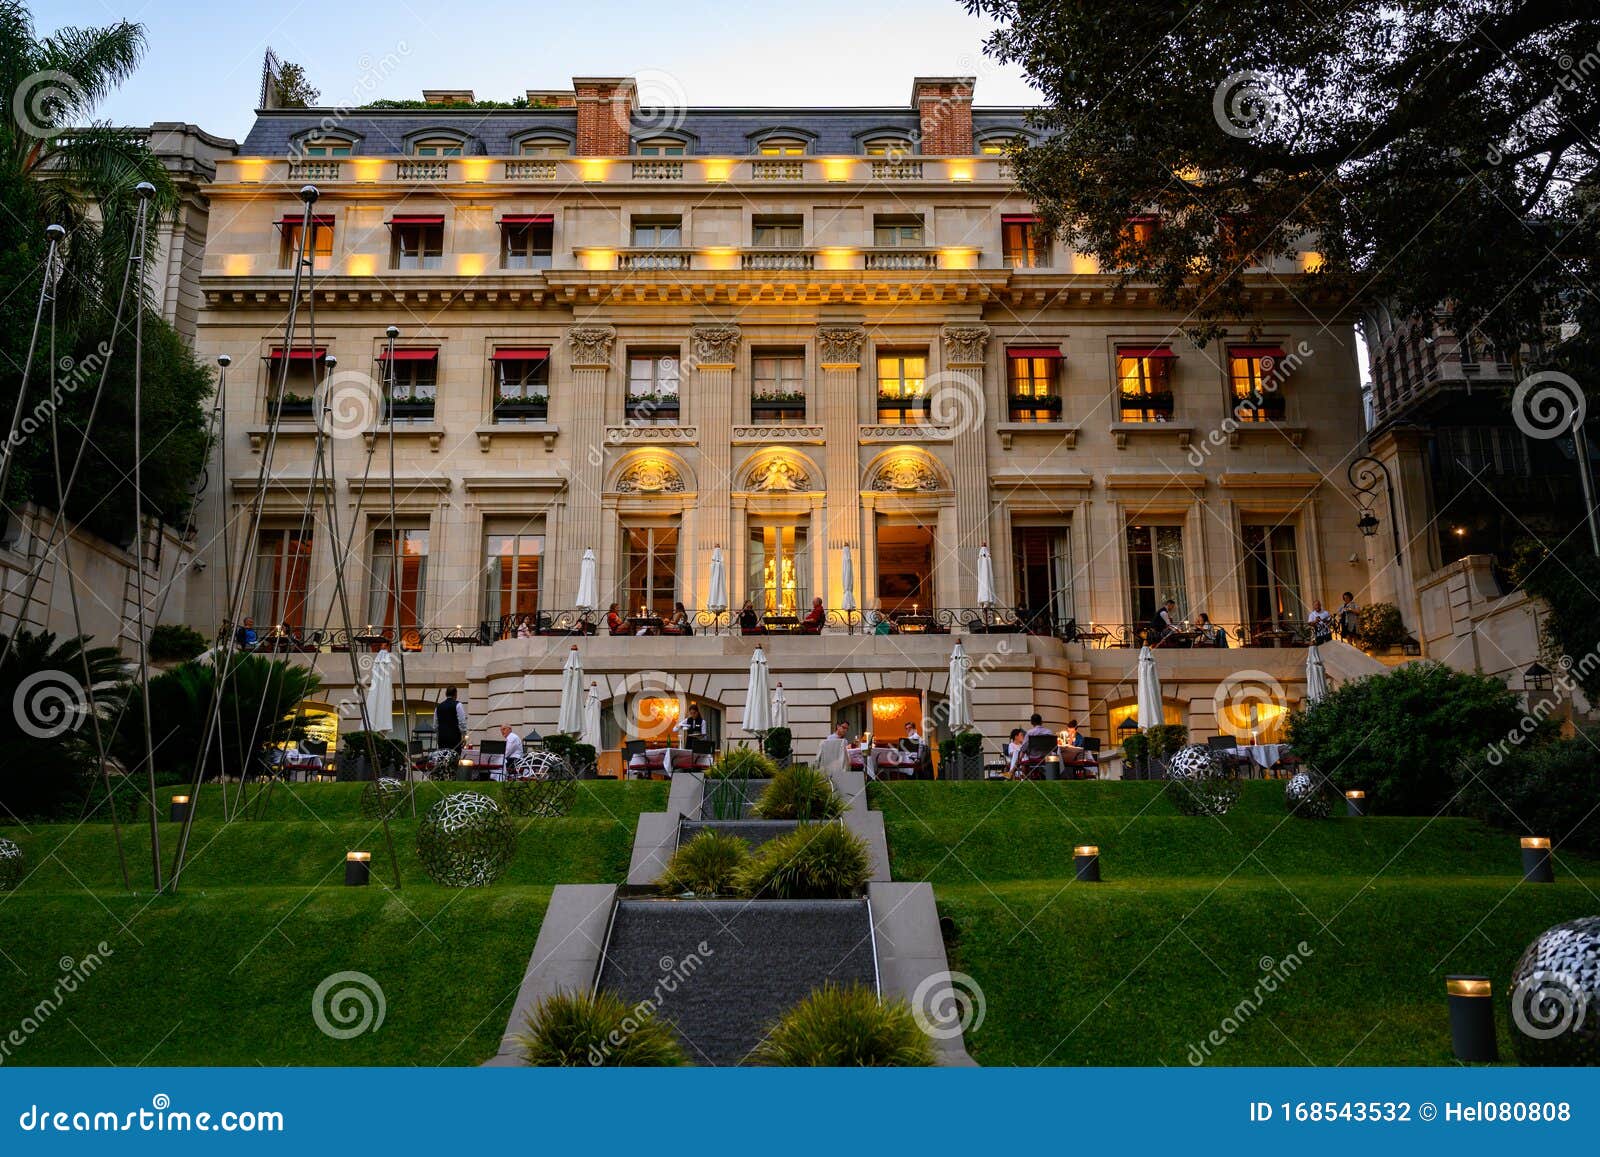 Palacio Duhau Park Hyatt Hotel Buenos Aires Argentina Garden